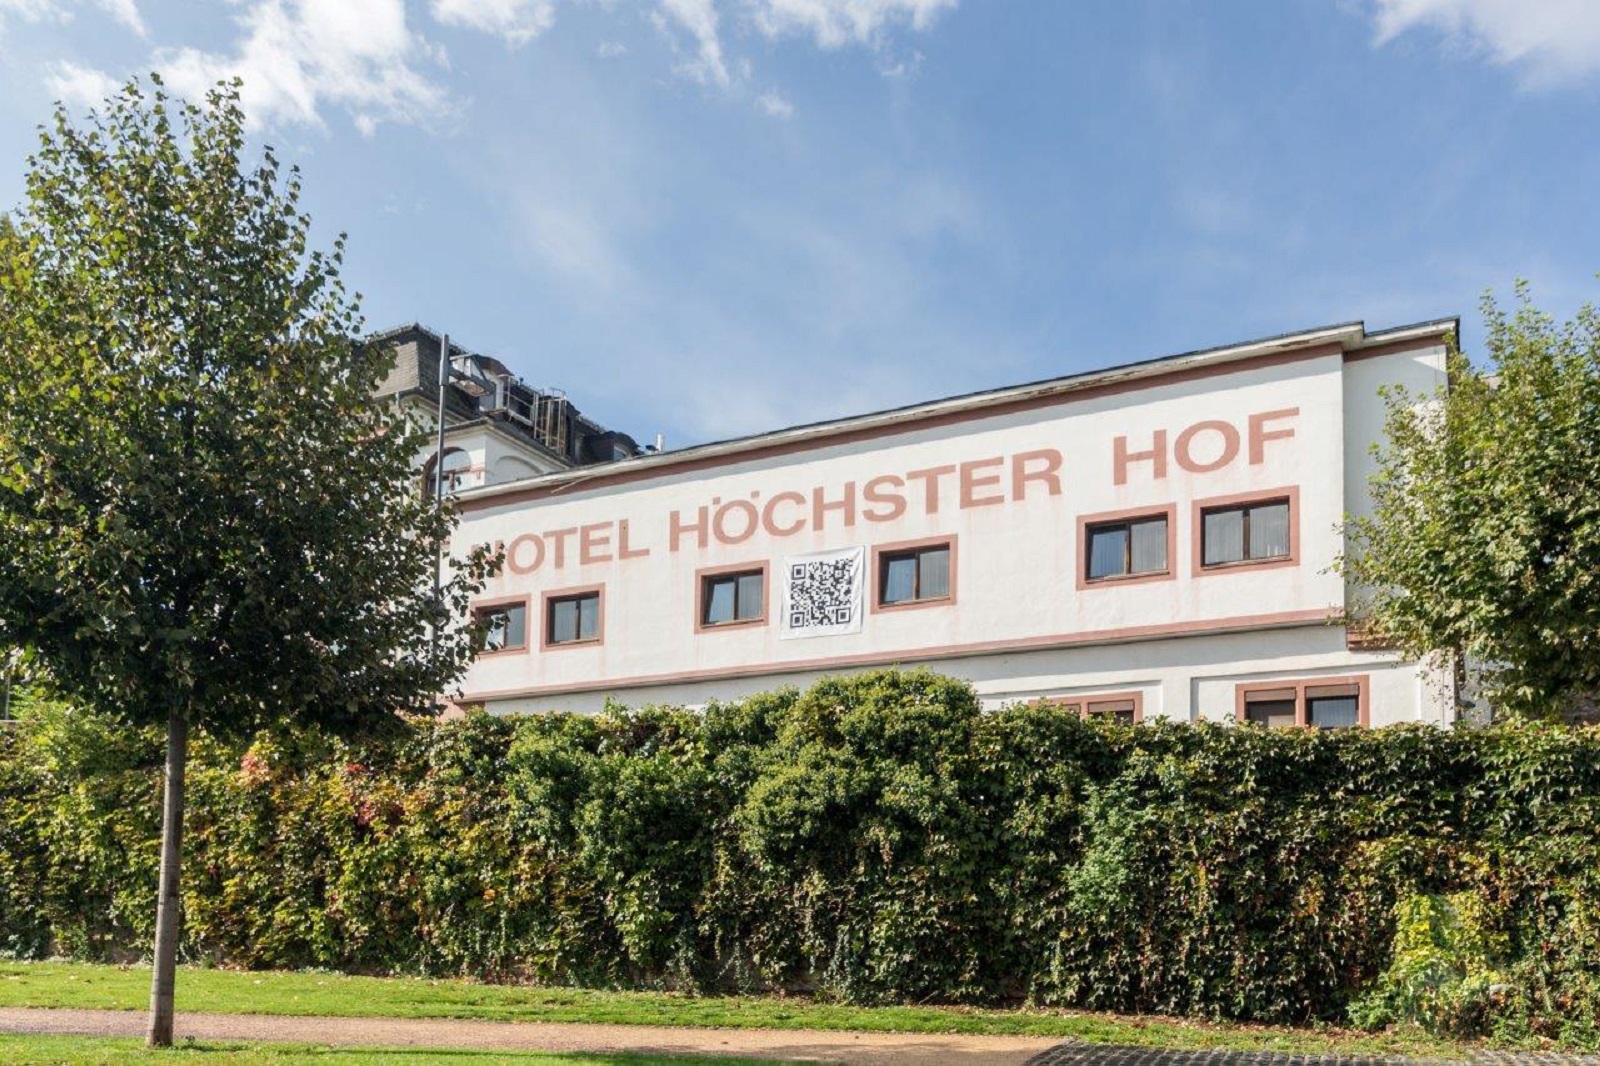 TRIP INN Hotel Höchster Hof <br/>57.00 ew <br/> <a href='http://vakantieoplossing.nl/outpage/?id=dea6769c126abbaf75823a809a151c73' target='_blank'>View Details</a>